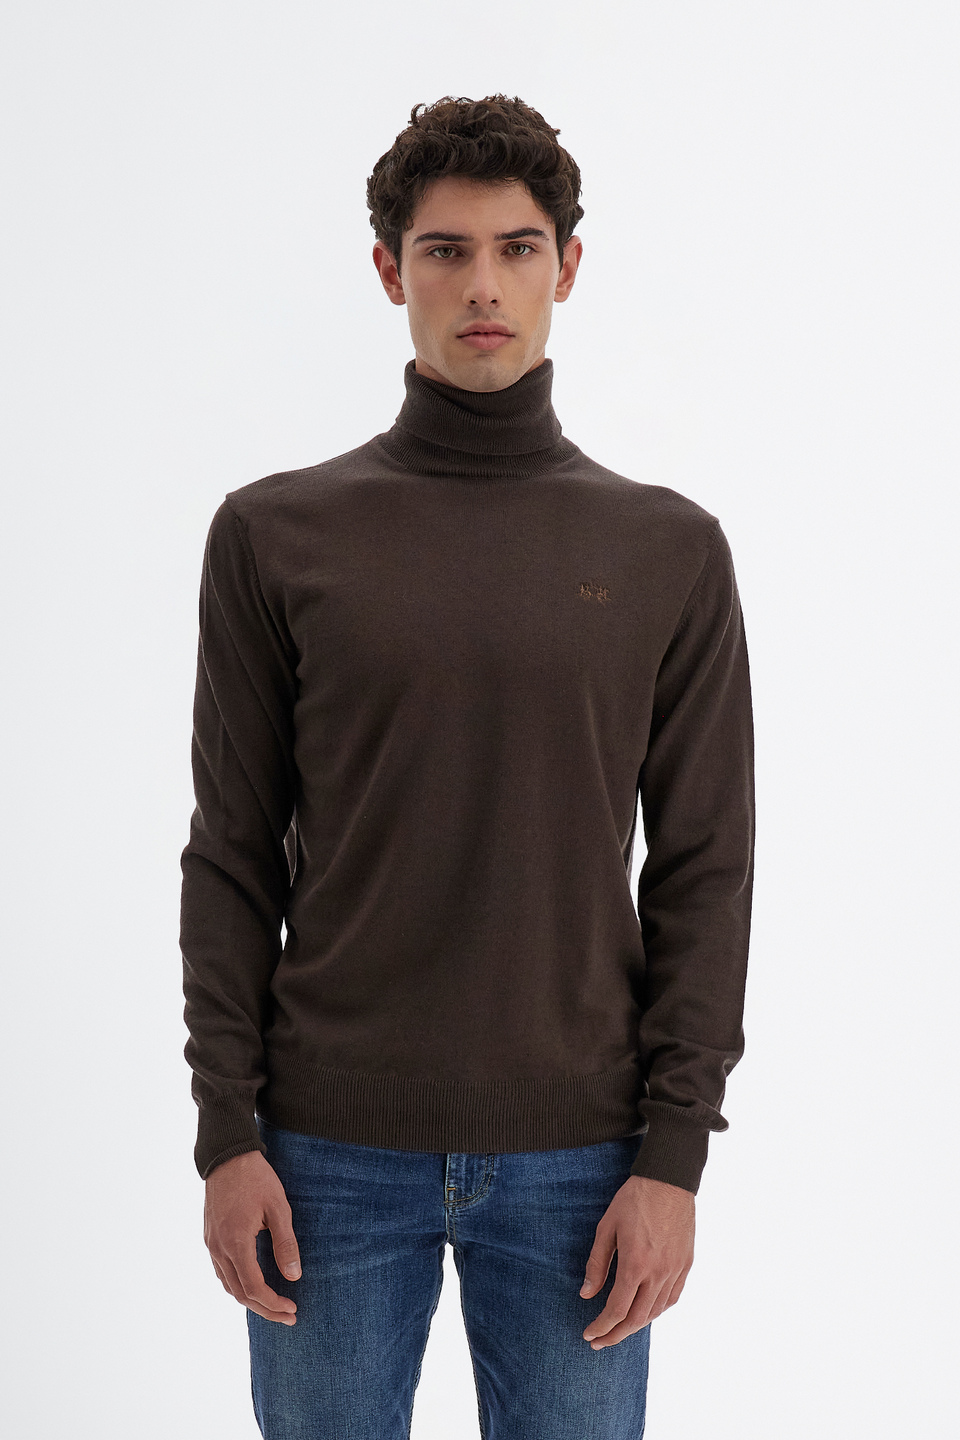 Camiseta de hombre de manga larga cuello en mezcla de algodón y lana regular fit Pinecone La Martina | Shop Online